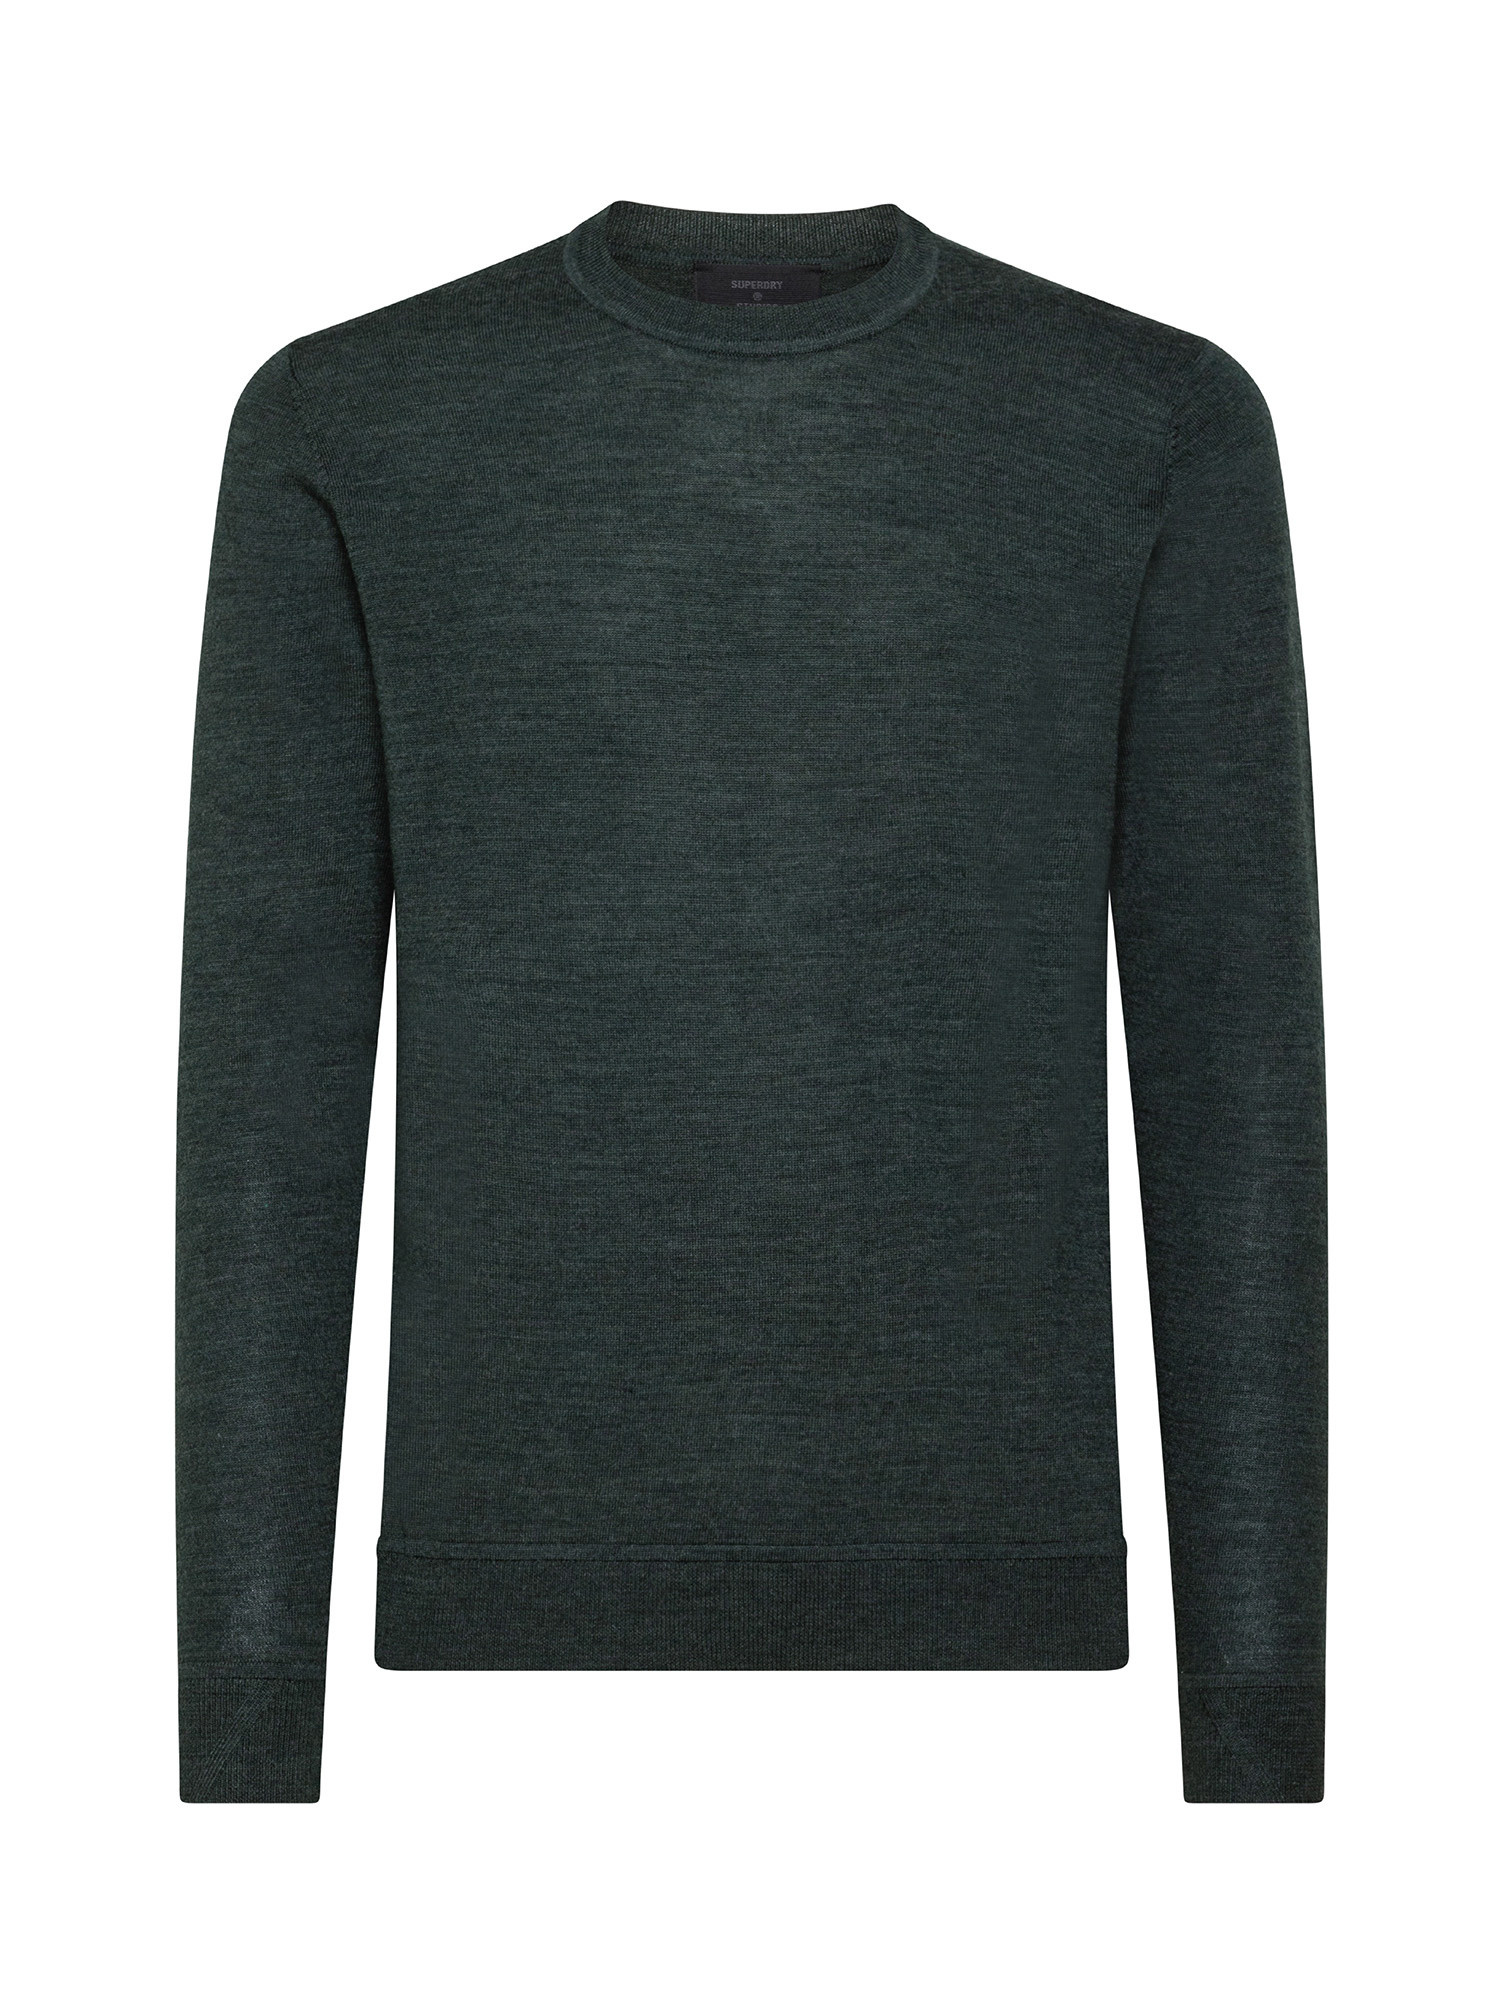 Superdry - Merino wool crewneck sweater, Green, large image number 0